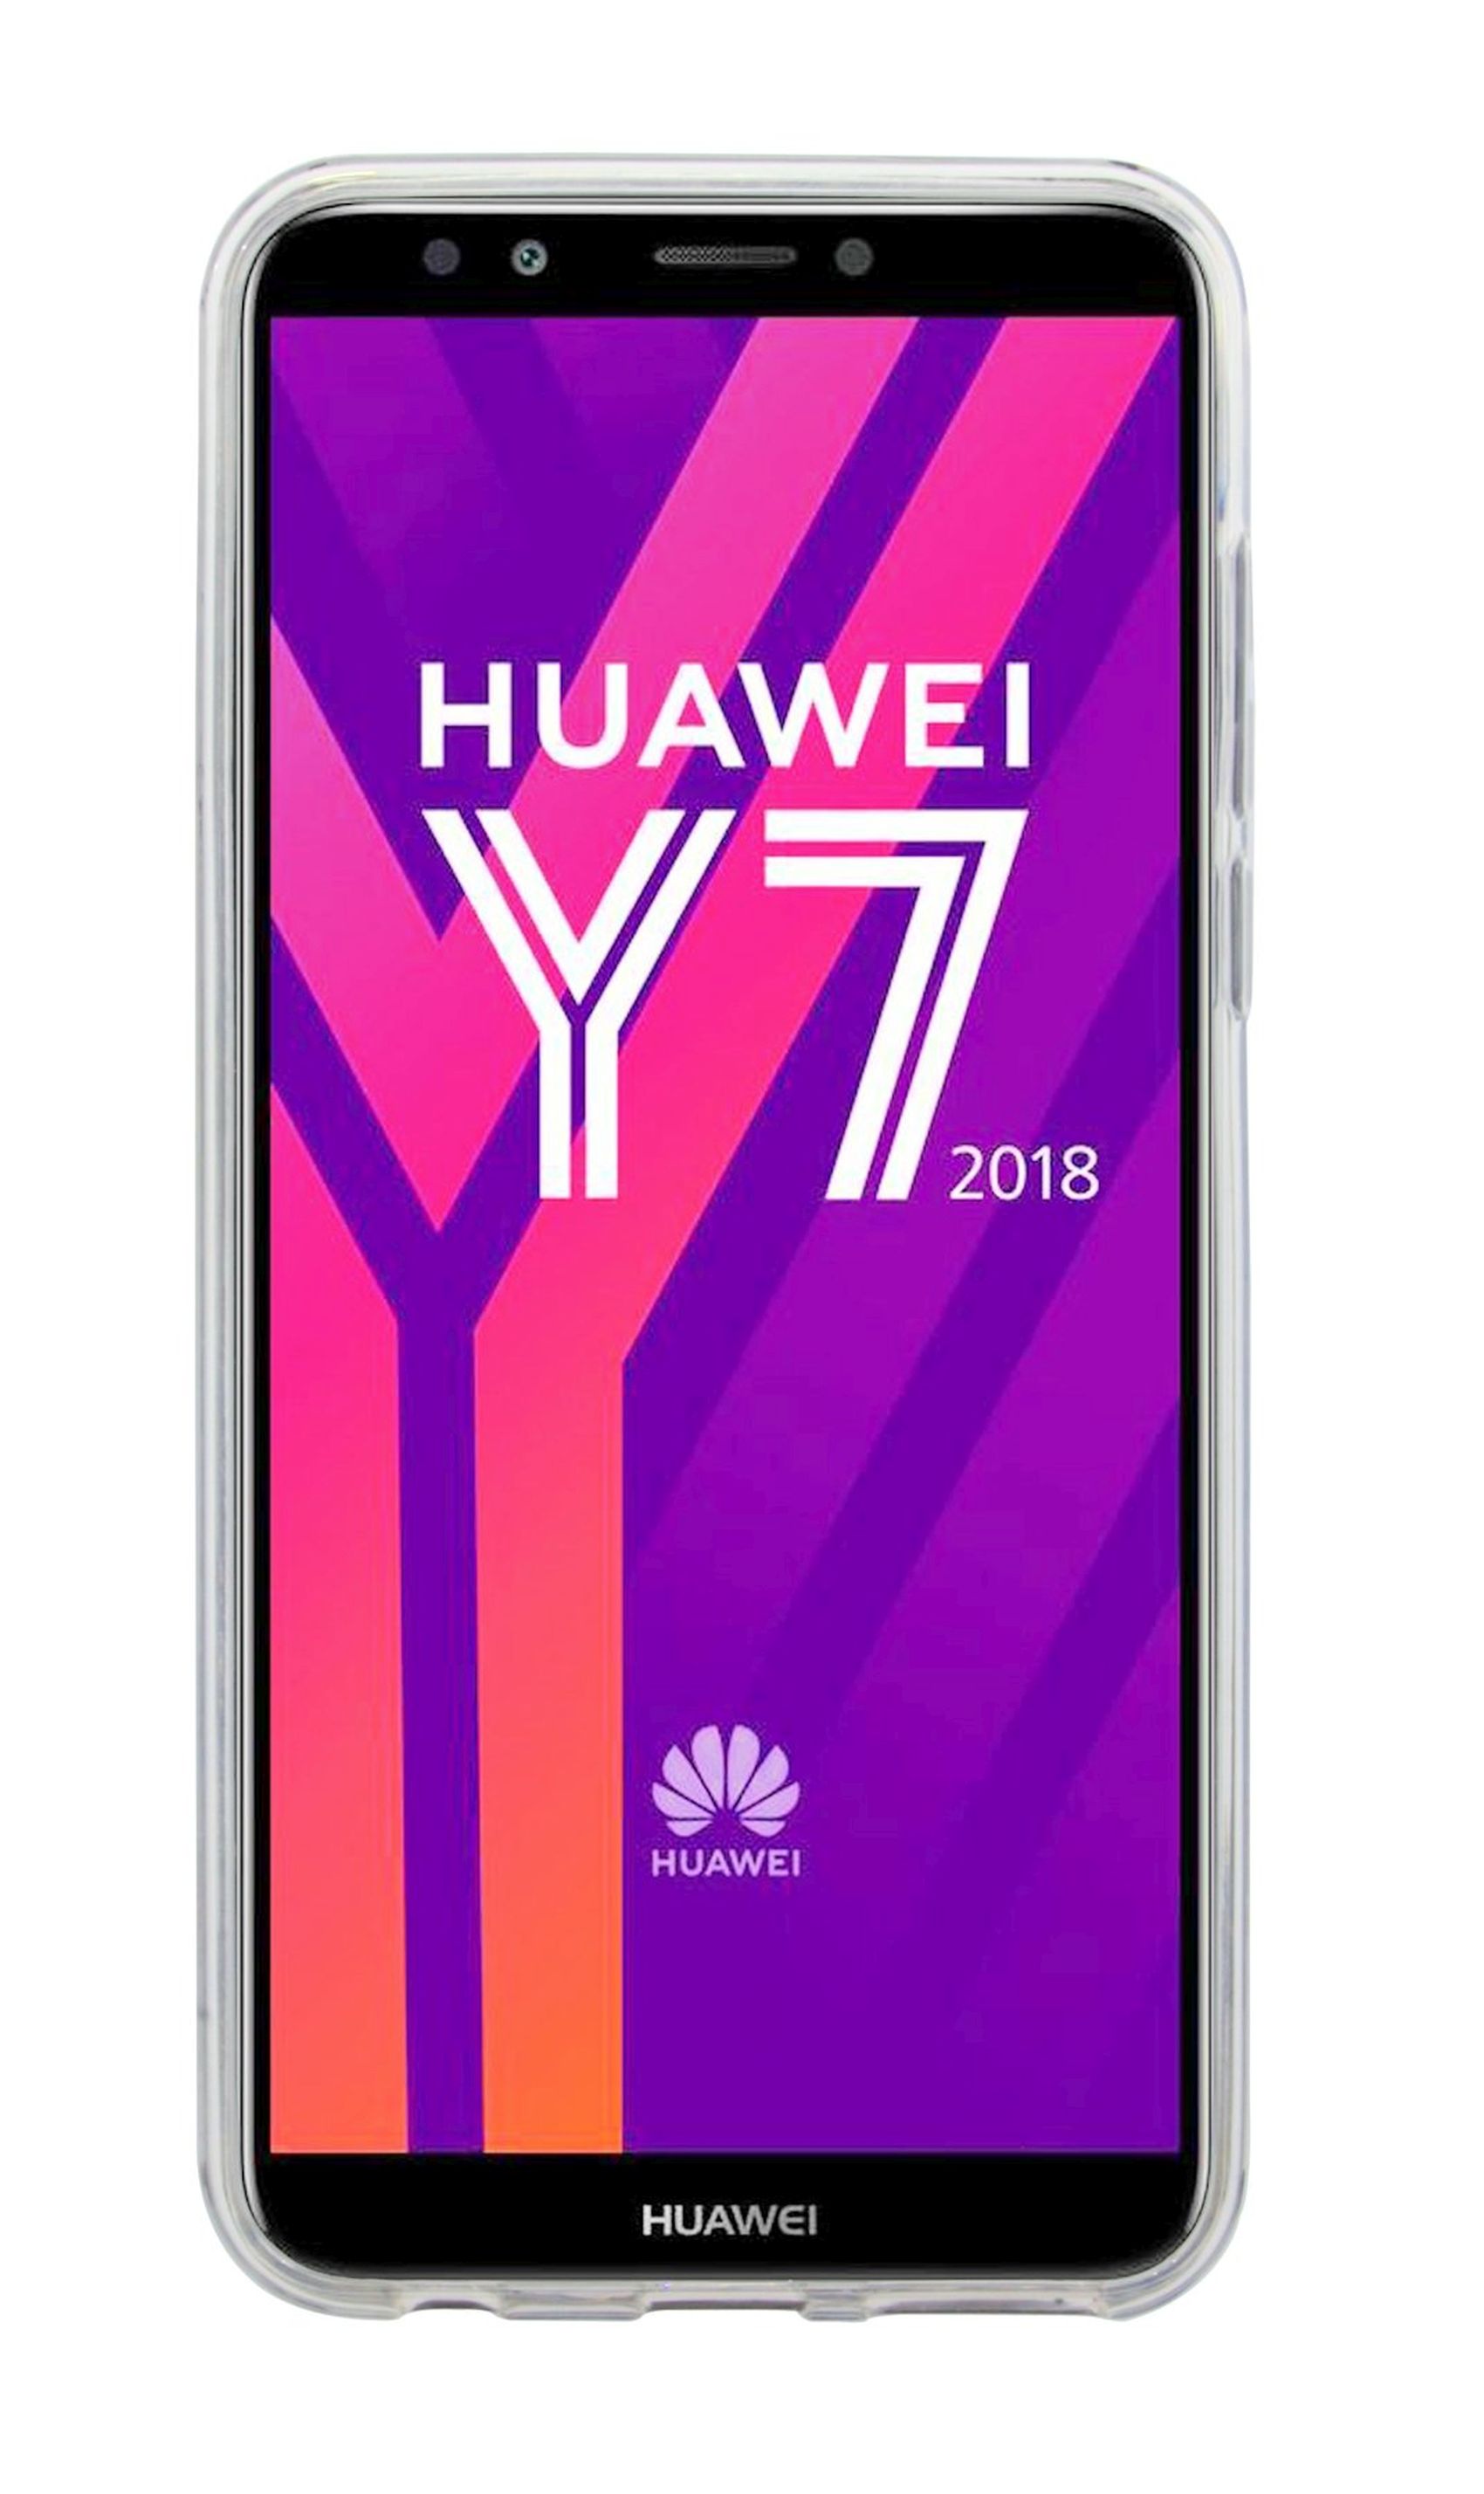 COFI S-Line Cover, Bumper, Huawei, 2018, Transparent Y7